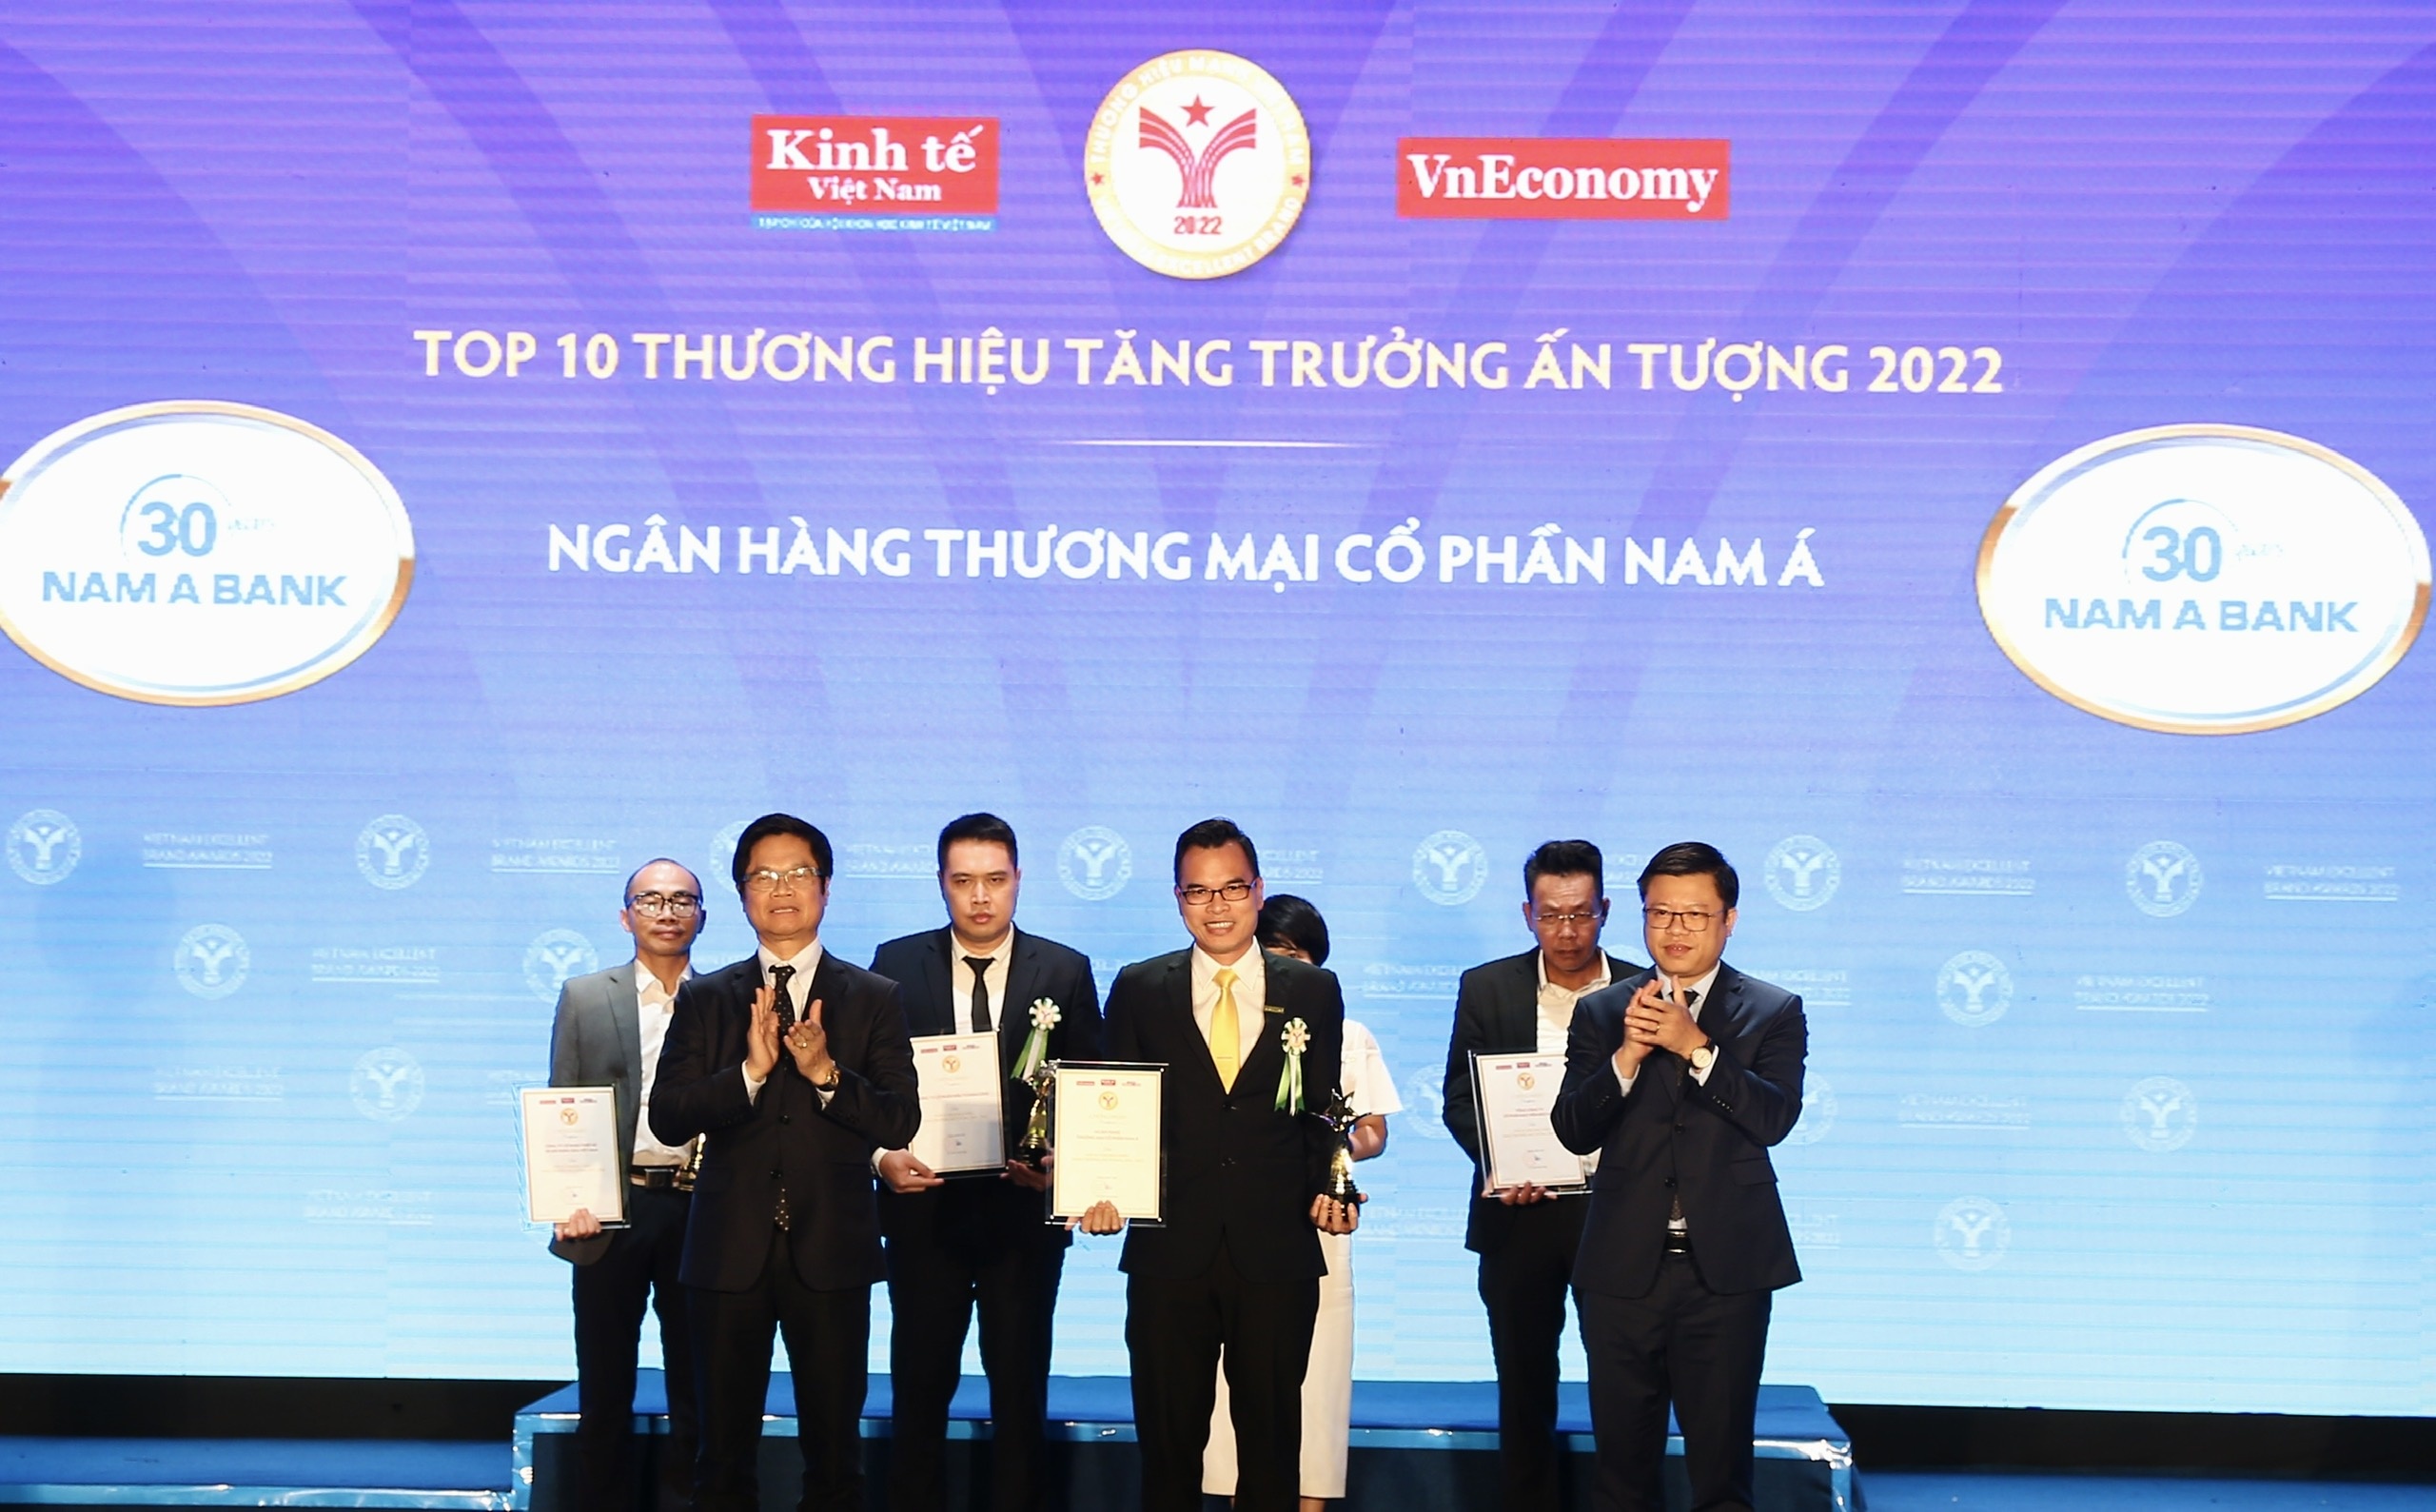 nam a bank lot top 10 thuong hieu tang truong an tuong 2022